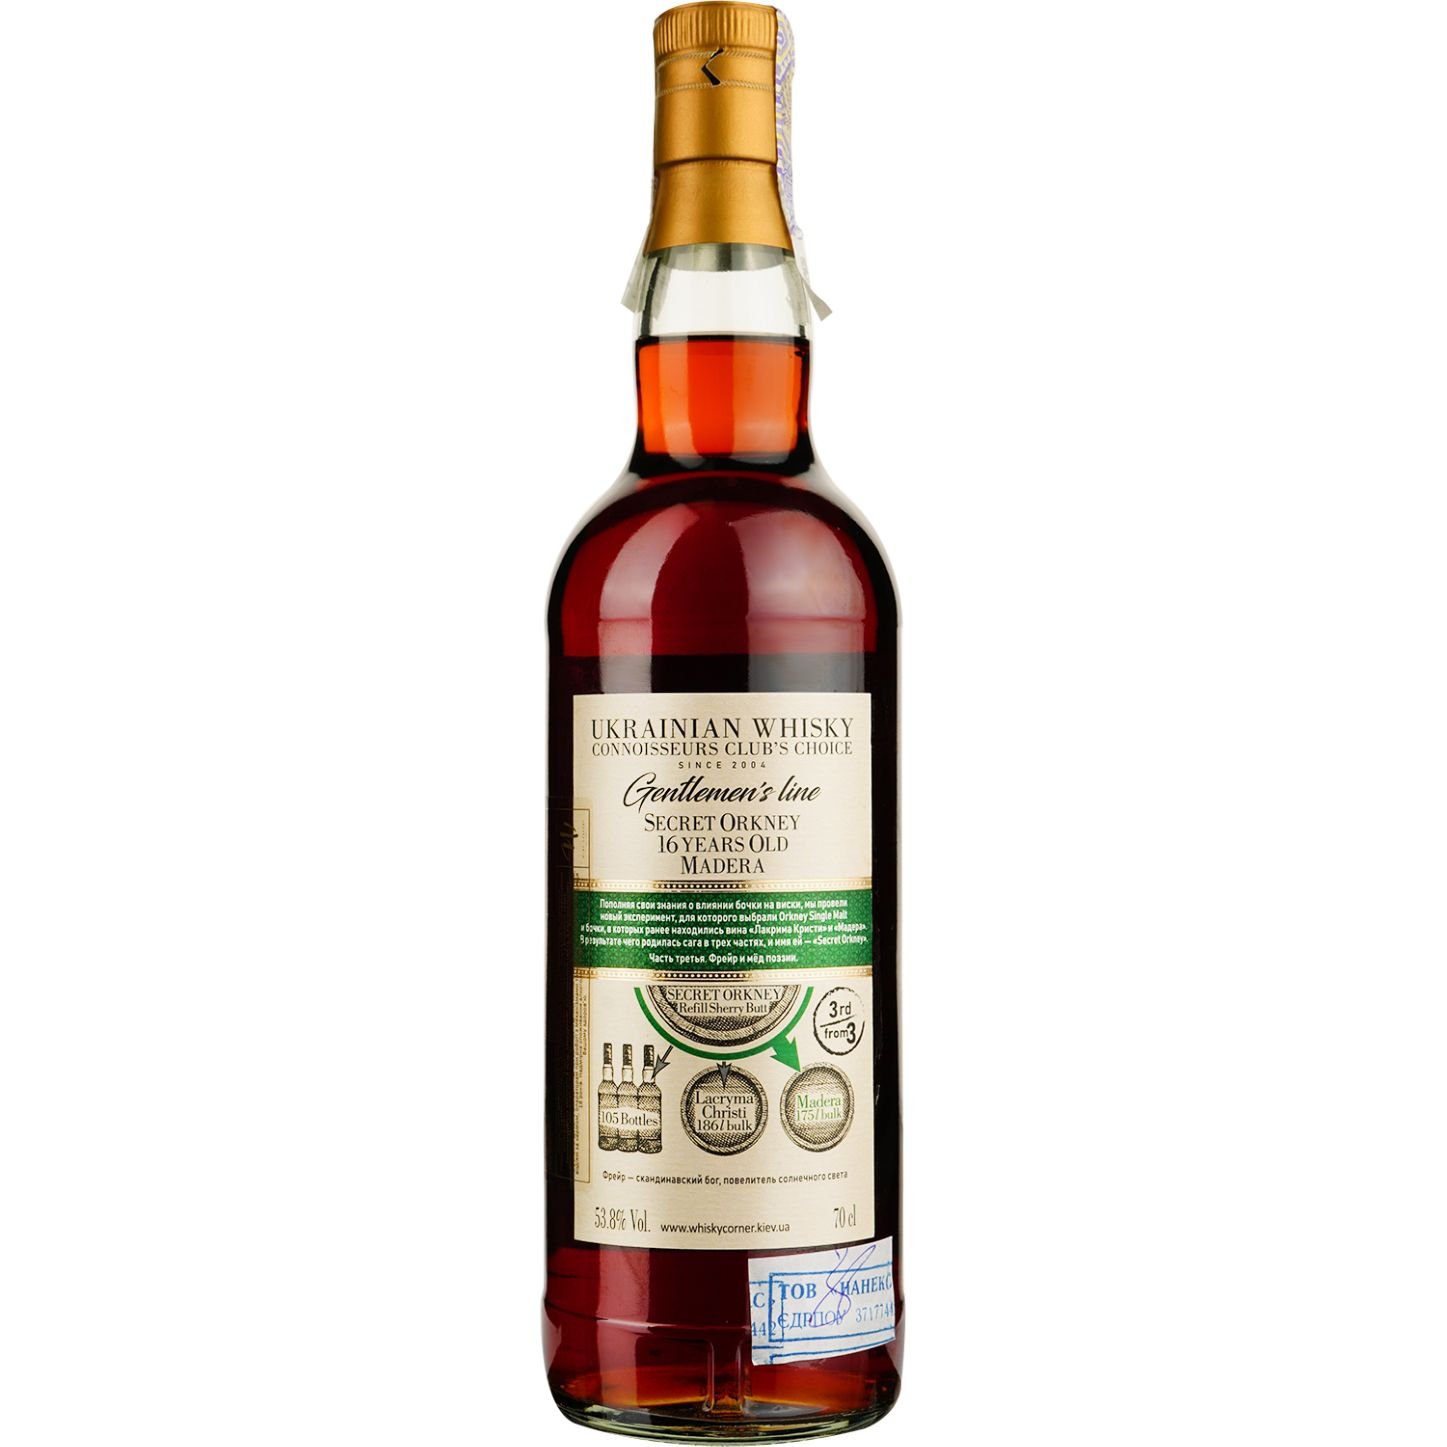 Віскі Secret Orkney 16 Years Old Madera Single Malt Scotch Whisky, у подарунковій упаковці, 53,8%, 0,7 л - фото 4